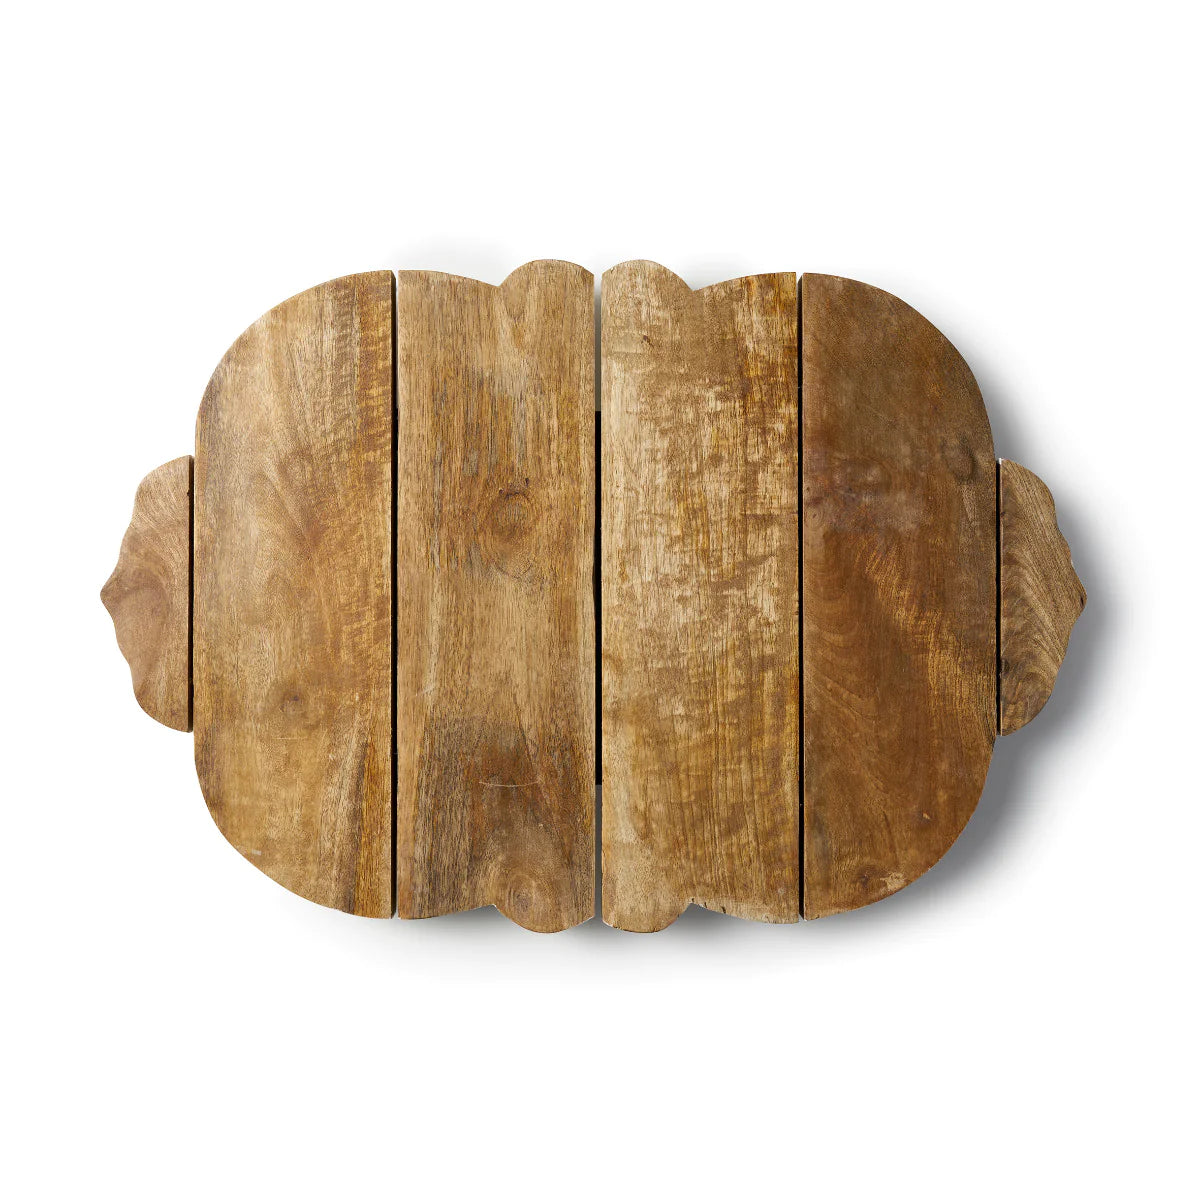 New Romantic Ovale vassoio legno - wood tray